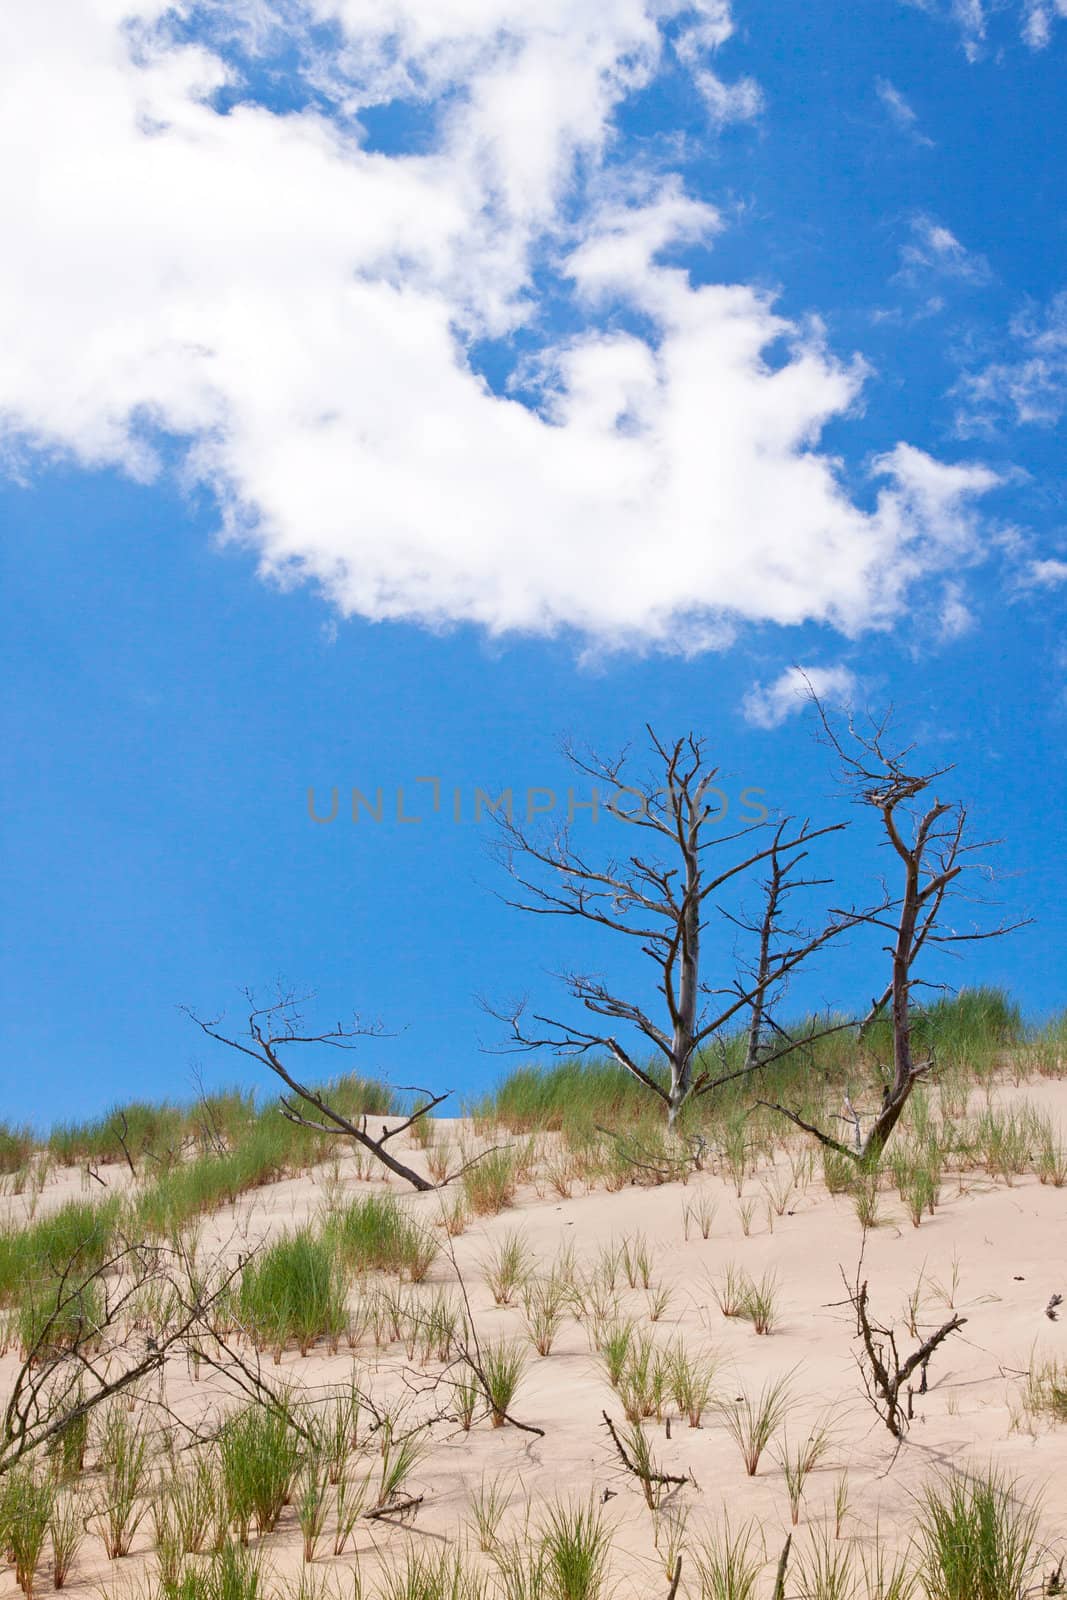 Moving dunes near the Baltic Sea by seawhisper